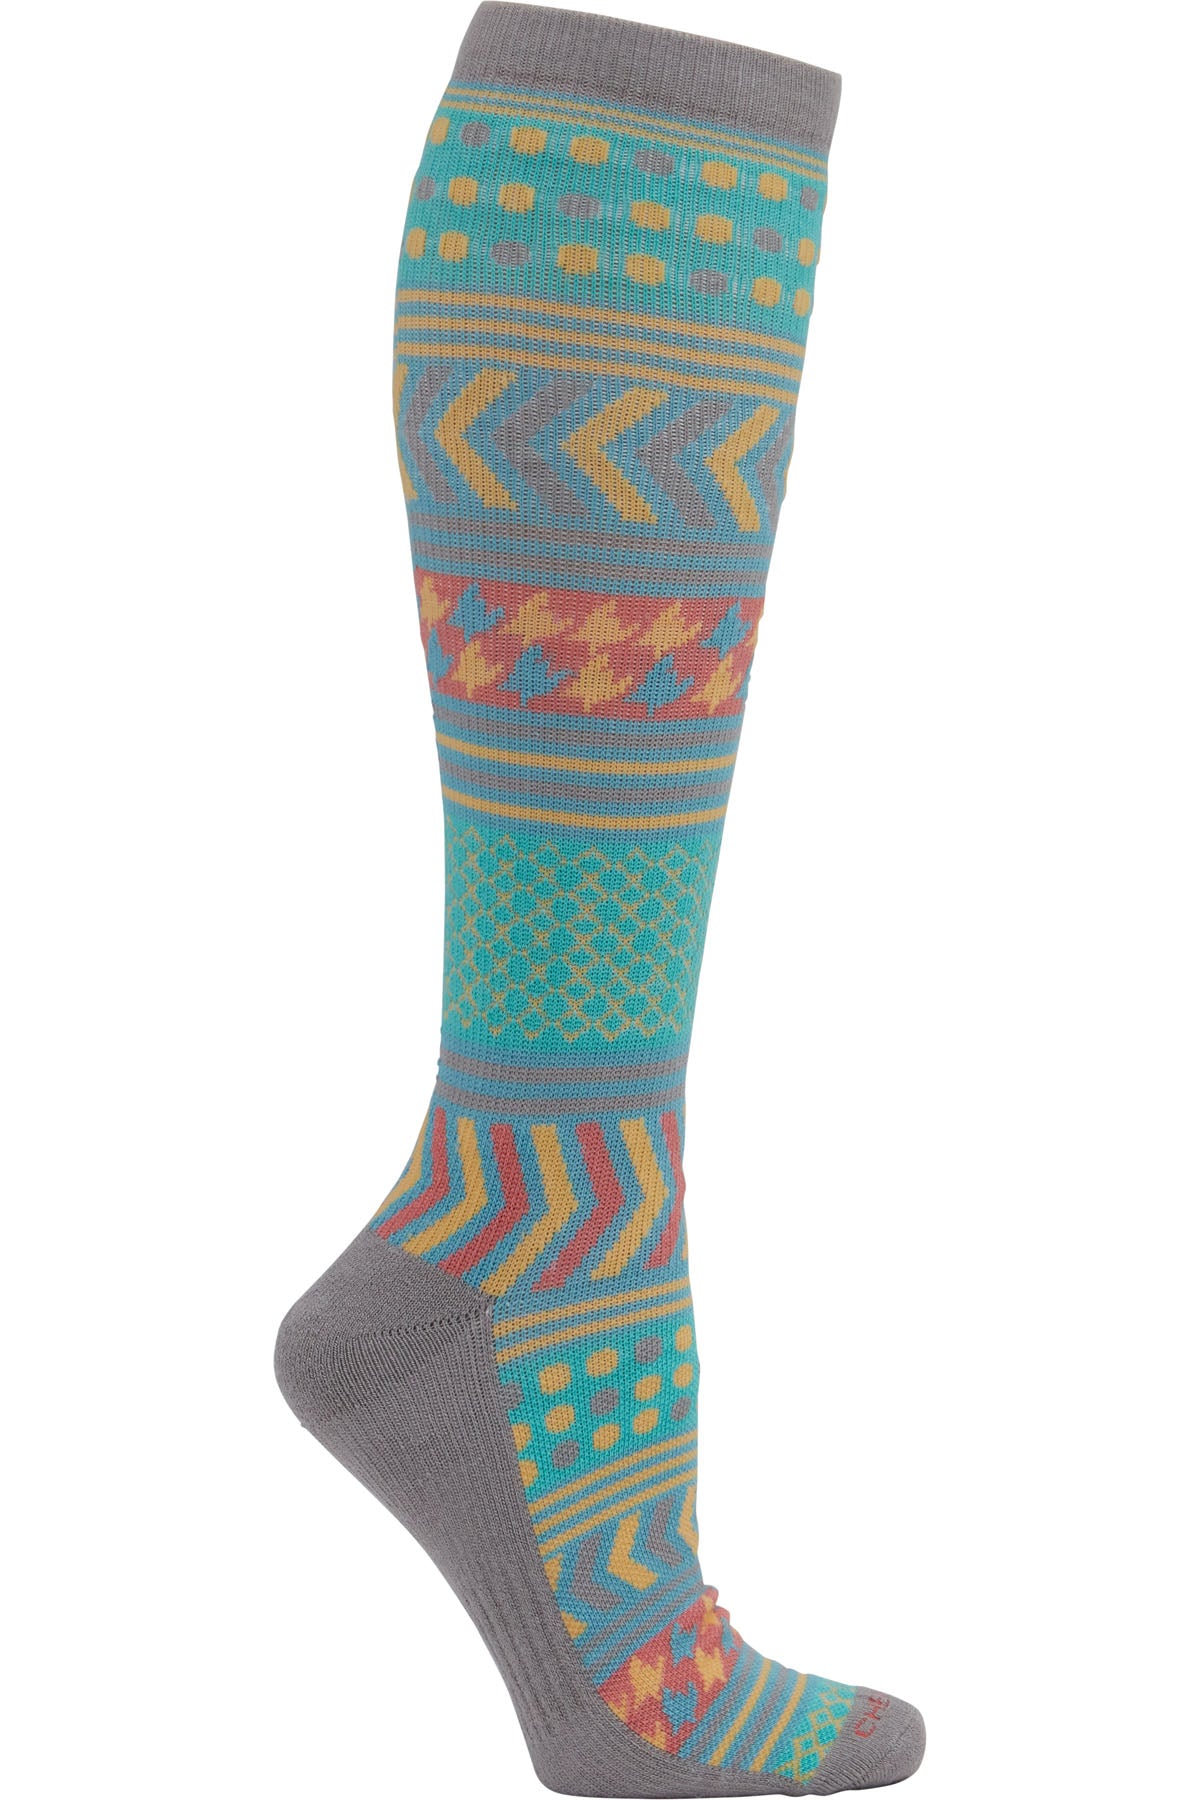 Knee High 15-20 mmHg Compression Socks Women's Compression Socks Cherokee Legwear Tranquil S/M 